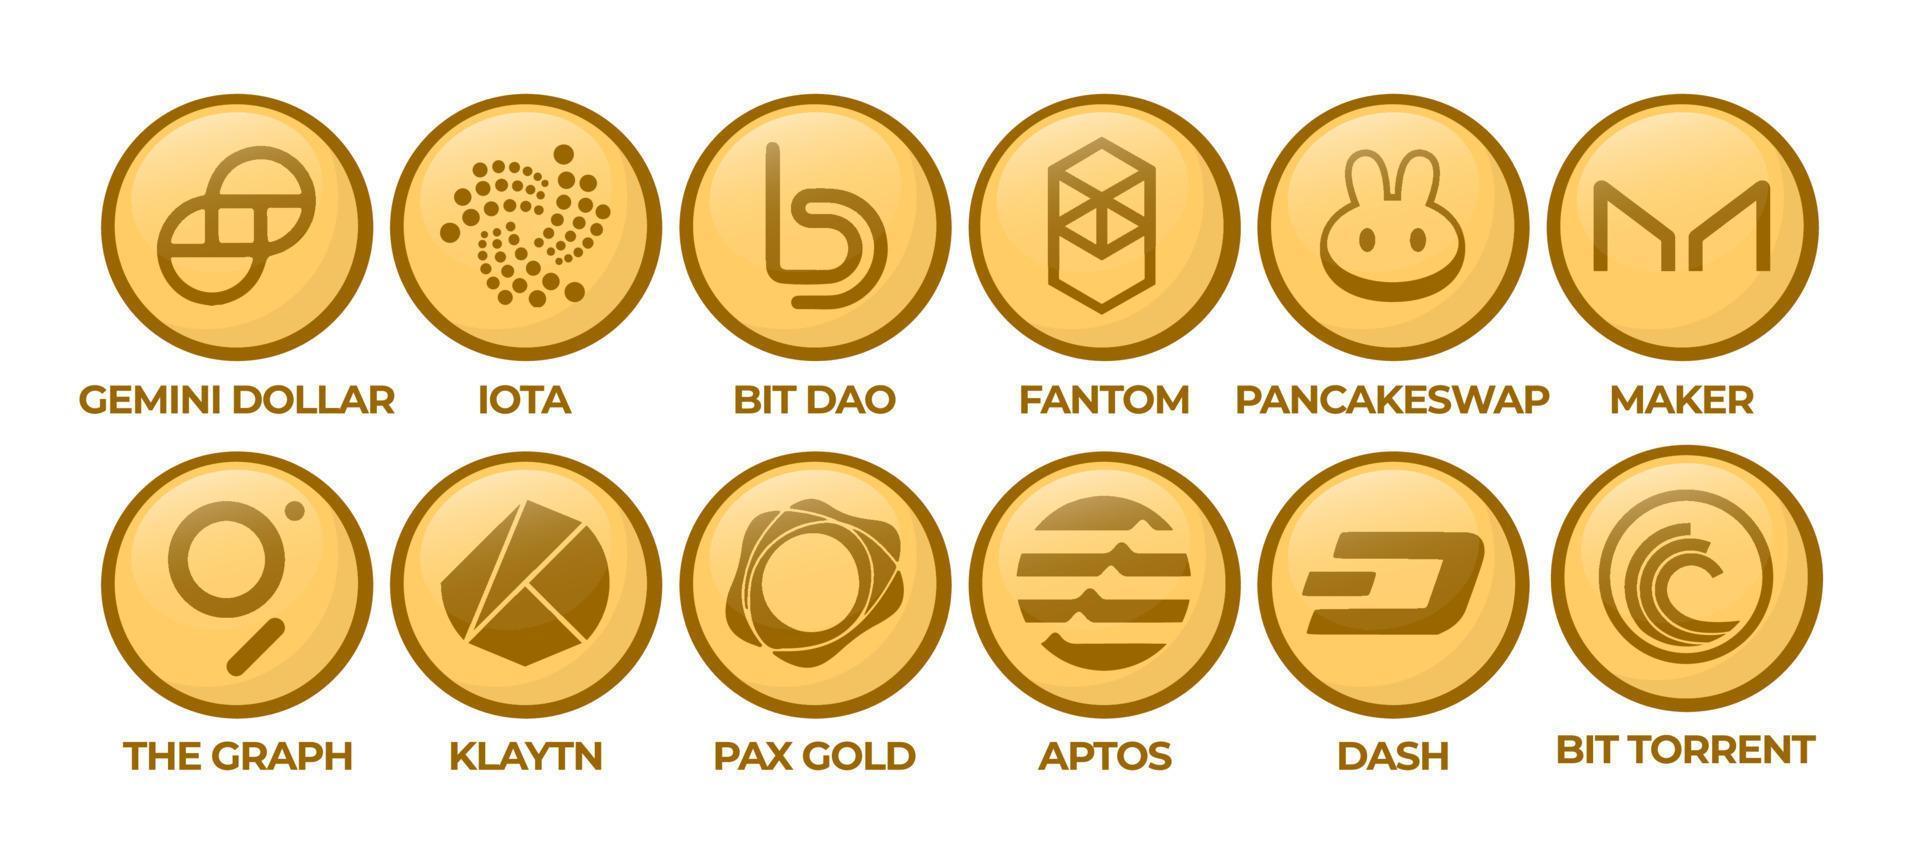 Set of Cryptocurrency Logo Coins Gemini Dollar, IOTA, BitDAO, Fantom, PancakeSwap, Maker, The Graph, Klaytn, PAX Gold, Aptos, Dash, BitTorrent vector